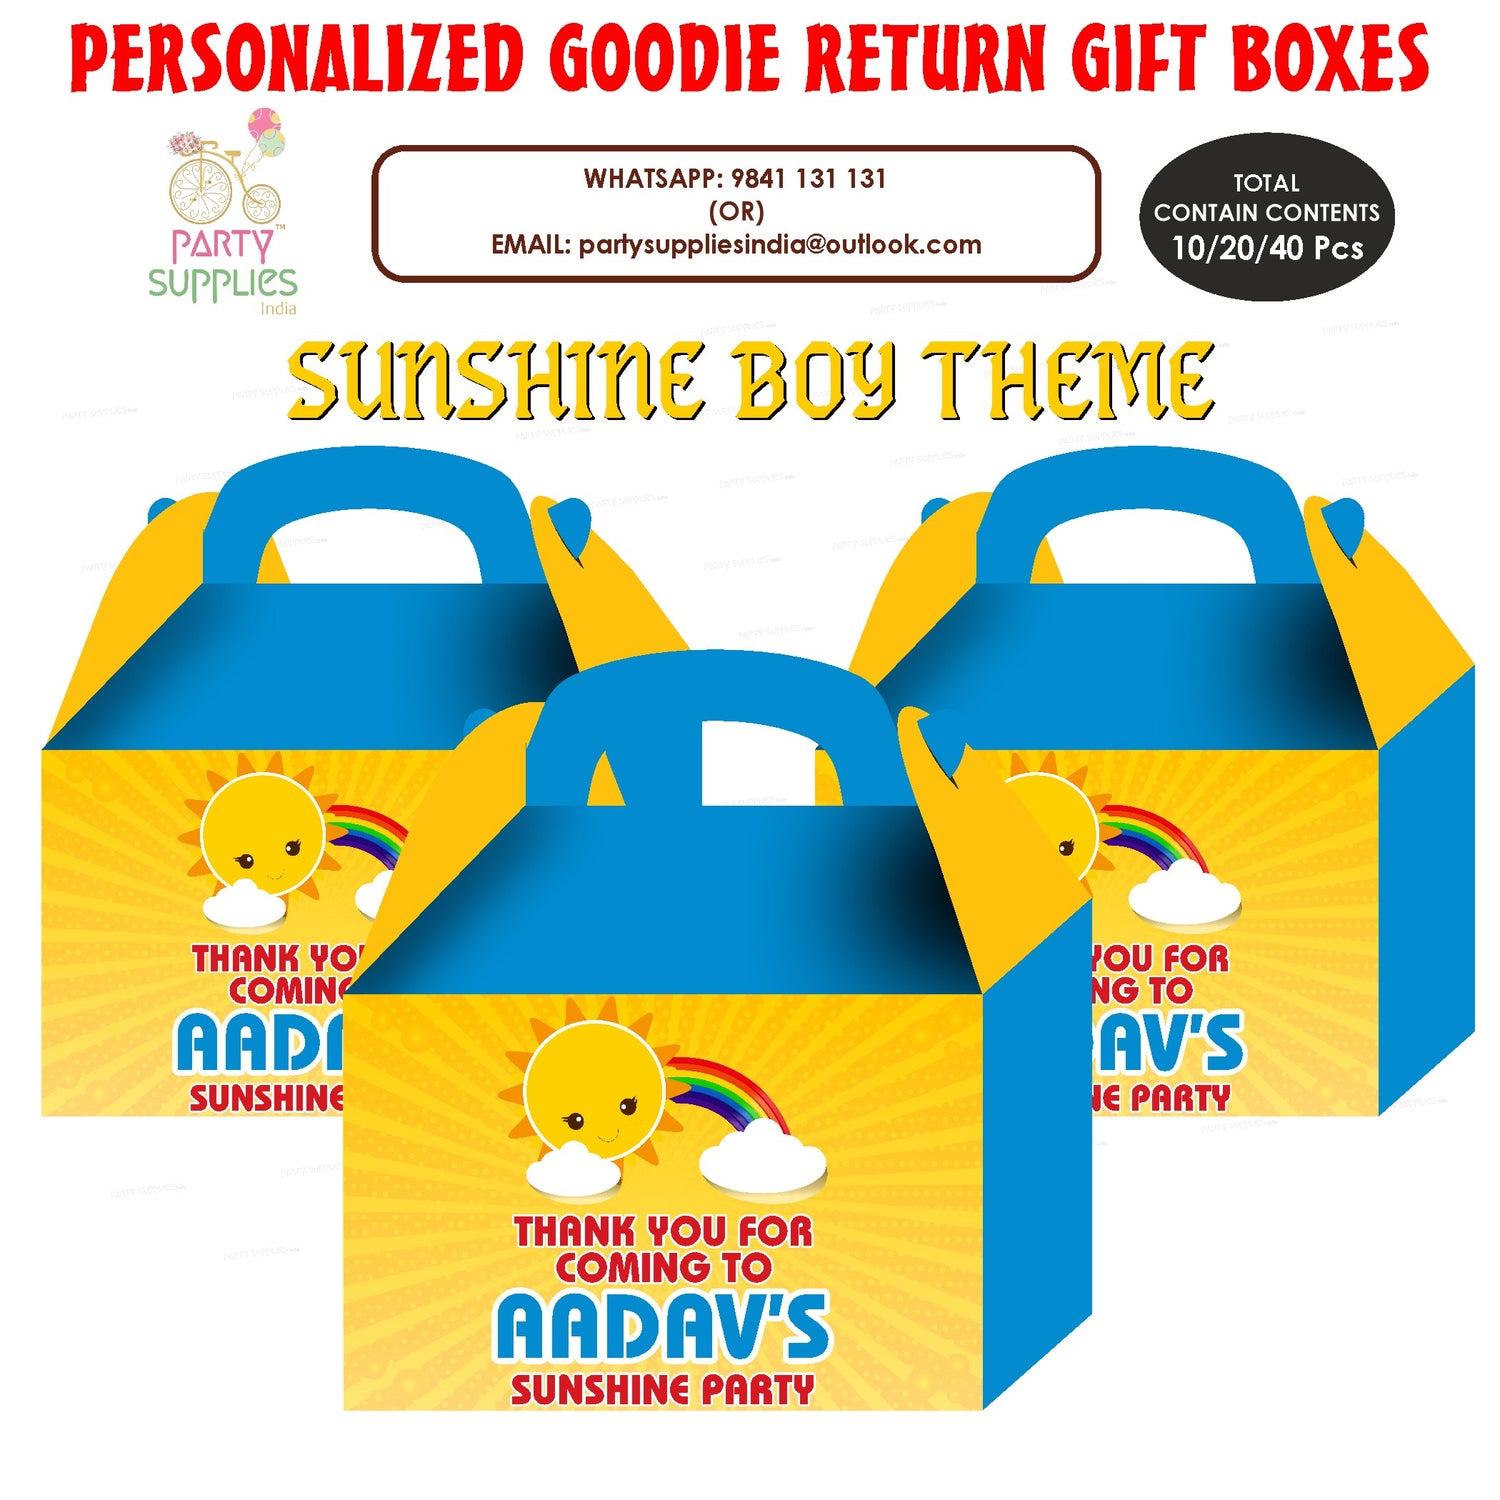 PSI Sunshine Boy Theme Goodie Return Gift Boxes